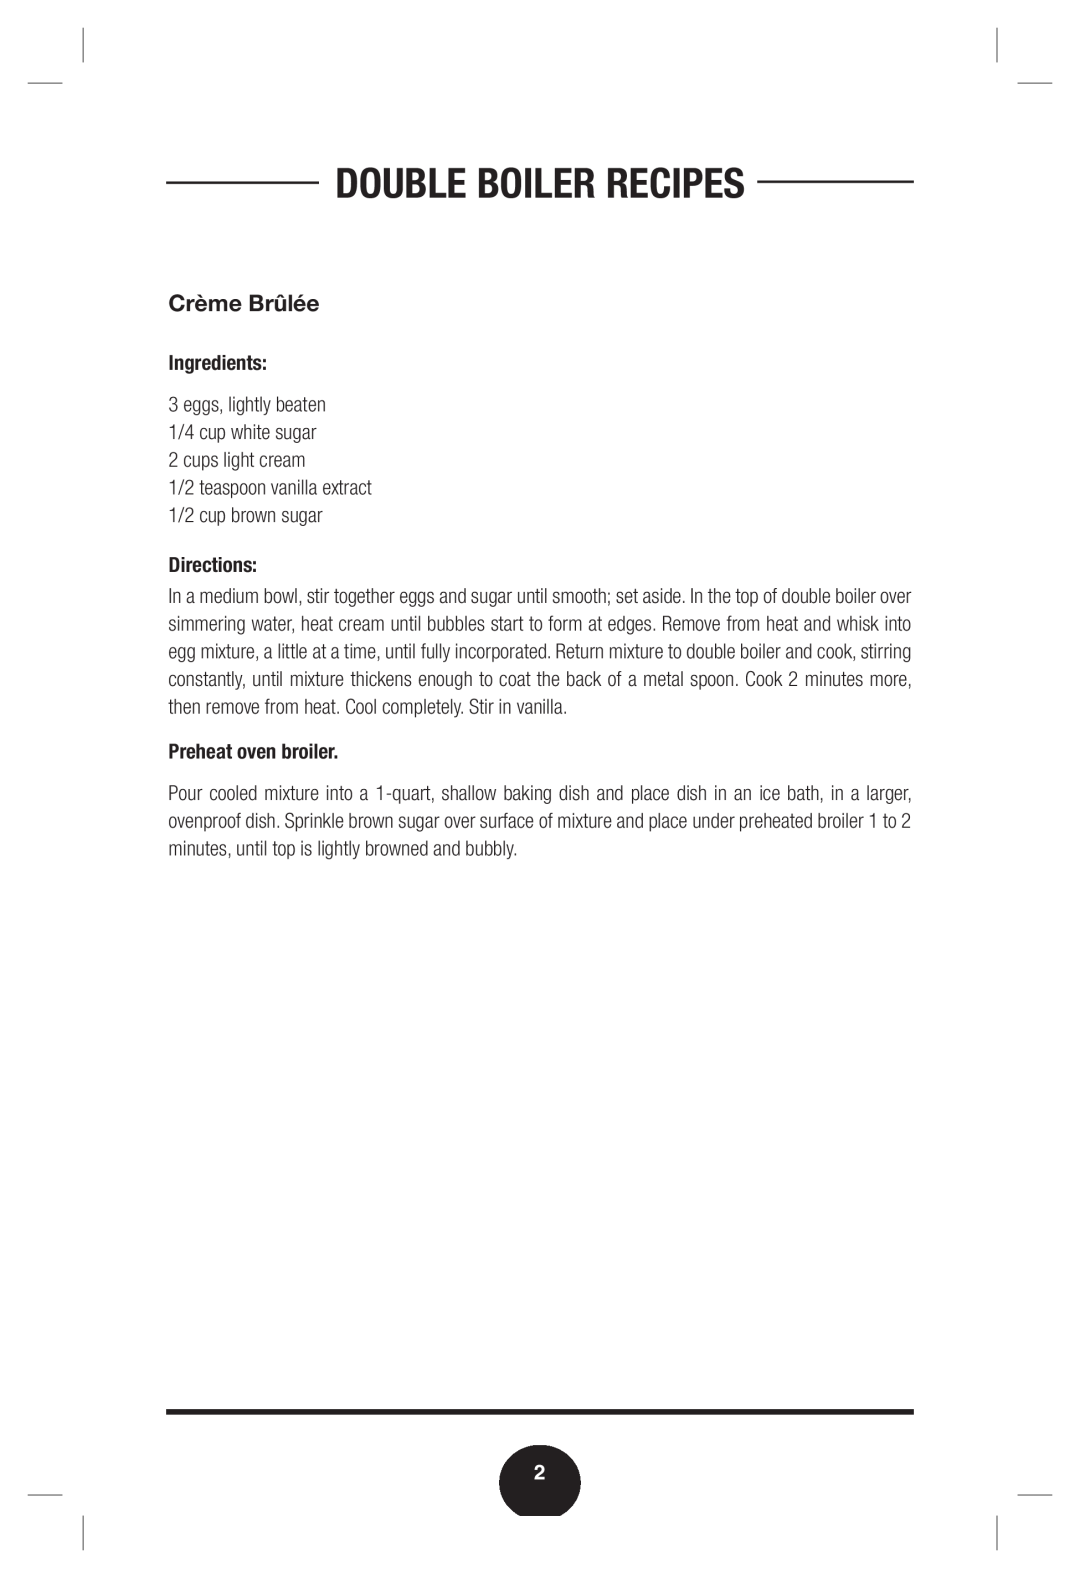 Fagor America manual Double Boiler Recipes, Crème Brûlée, Ingredients, Directions, Preheat oven broiler 